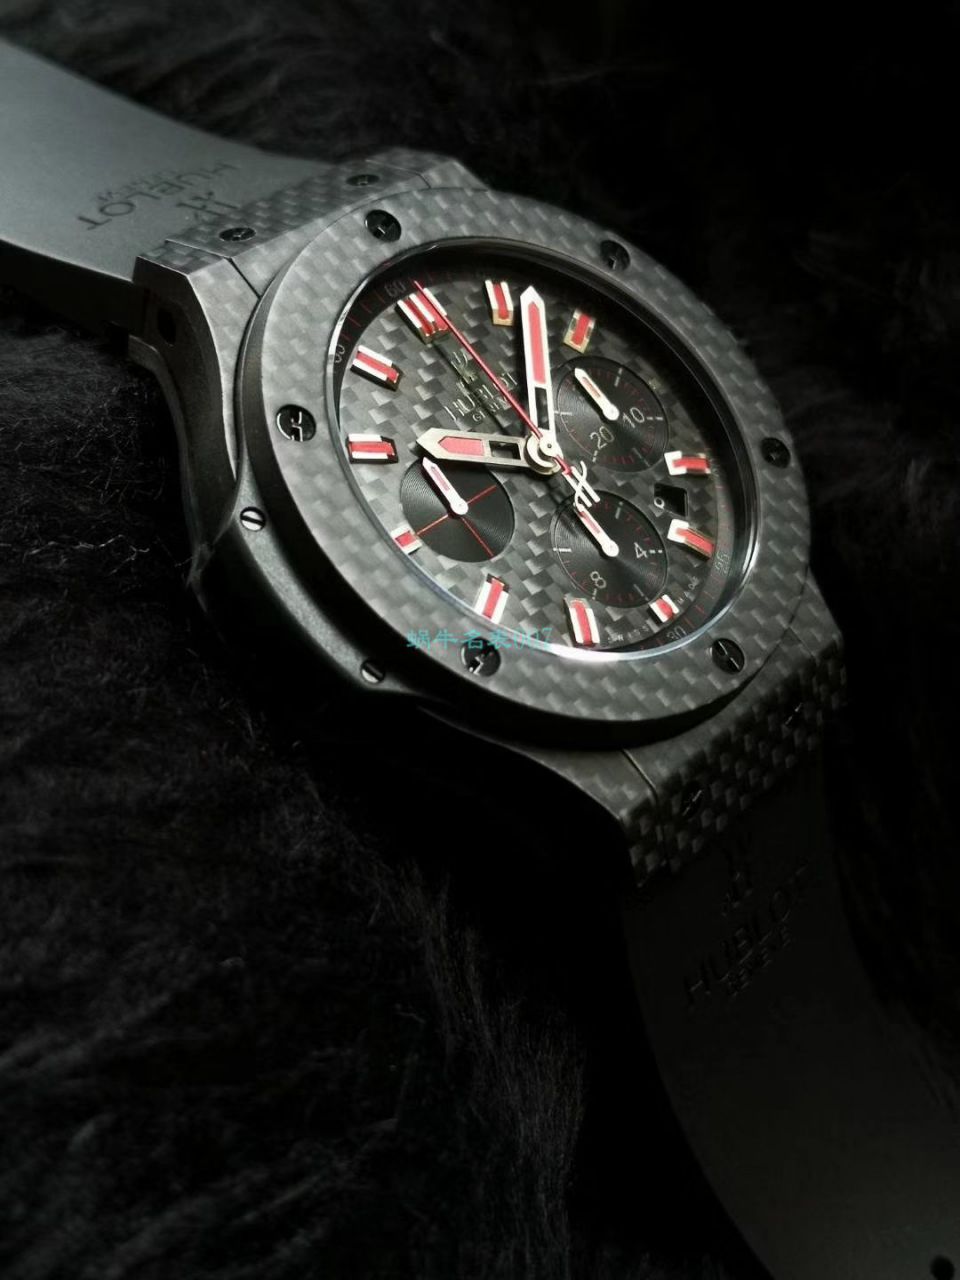 HBBV6厂超A精仿手表宇舶大爆炸碳纤维红字限定特别版腕表 